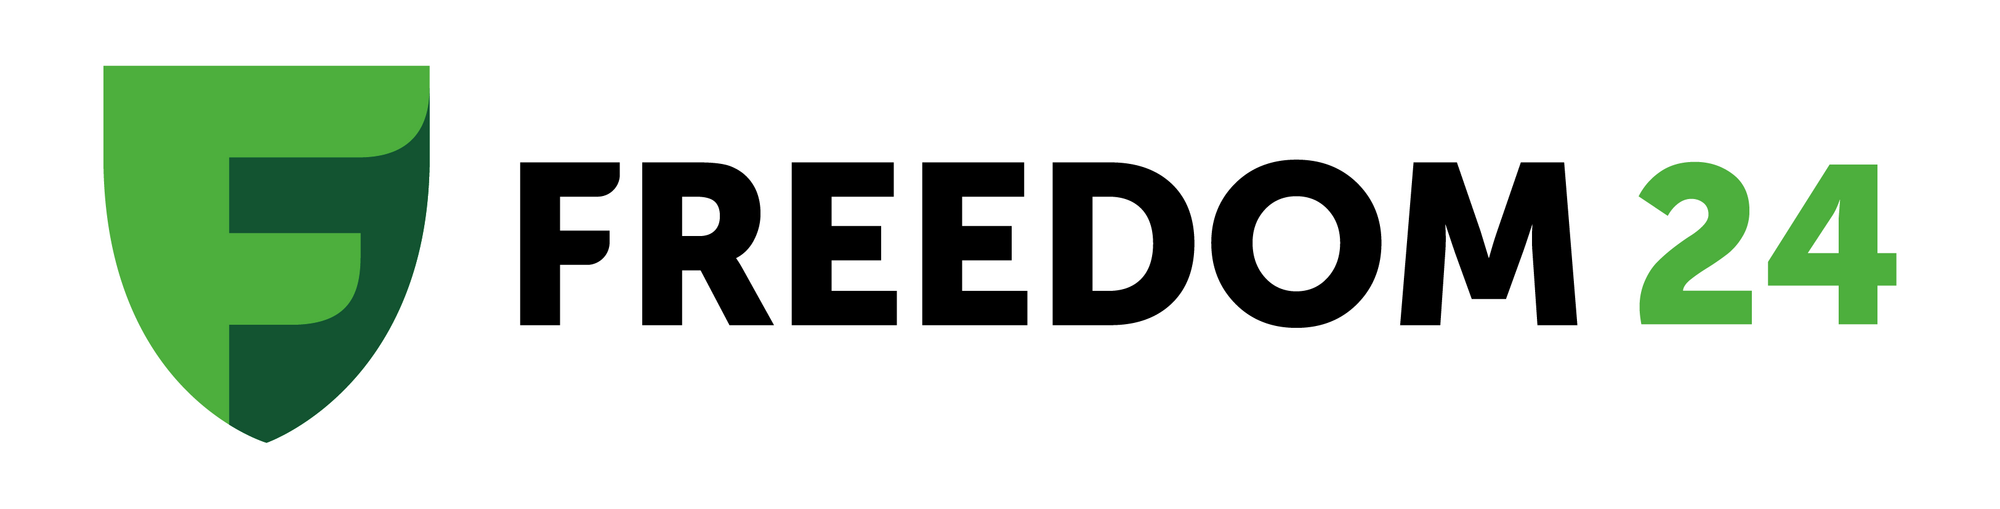 ¿Que es Freedom 24?  Broker para invertir en bolsa